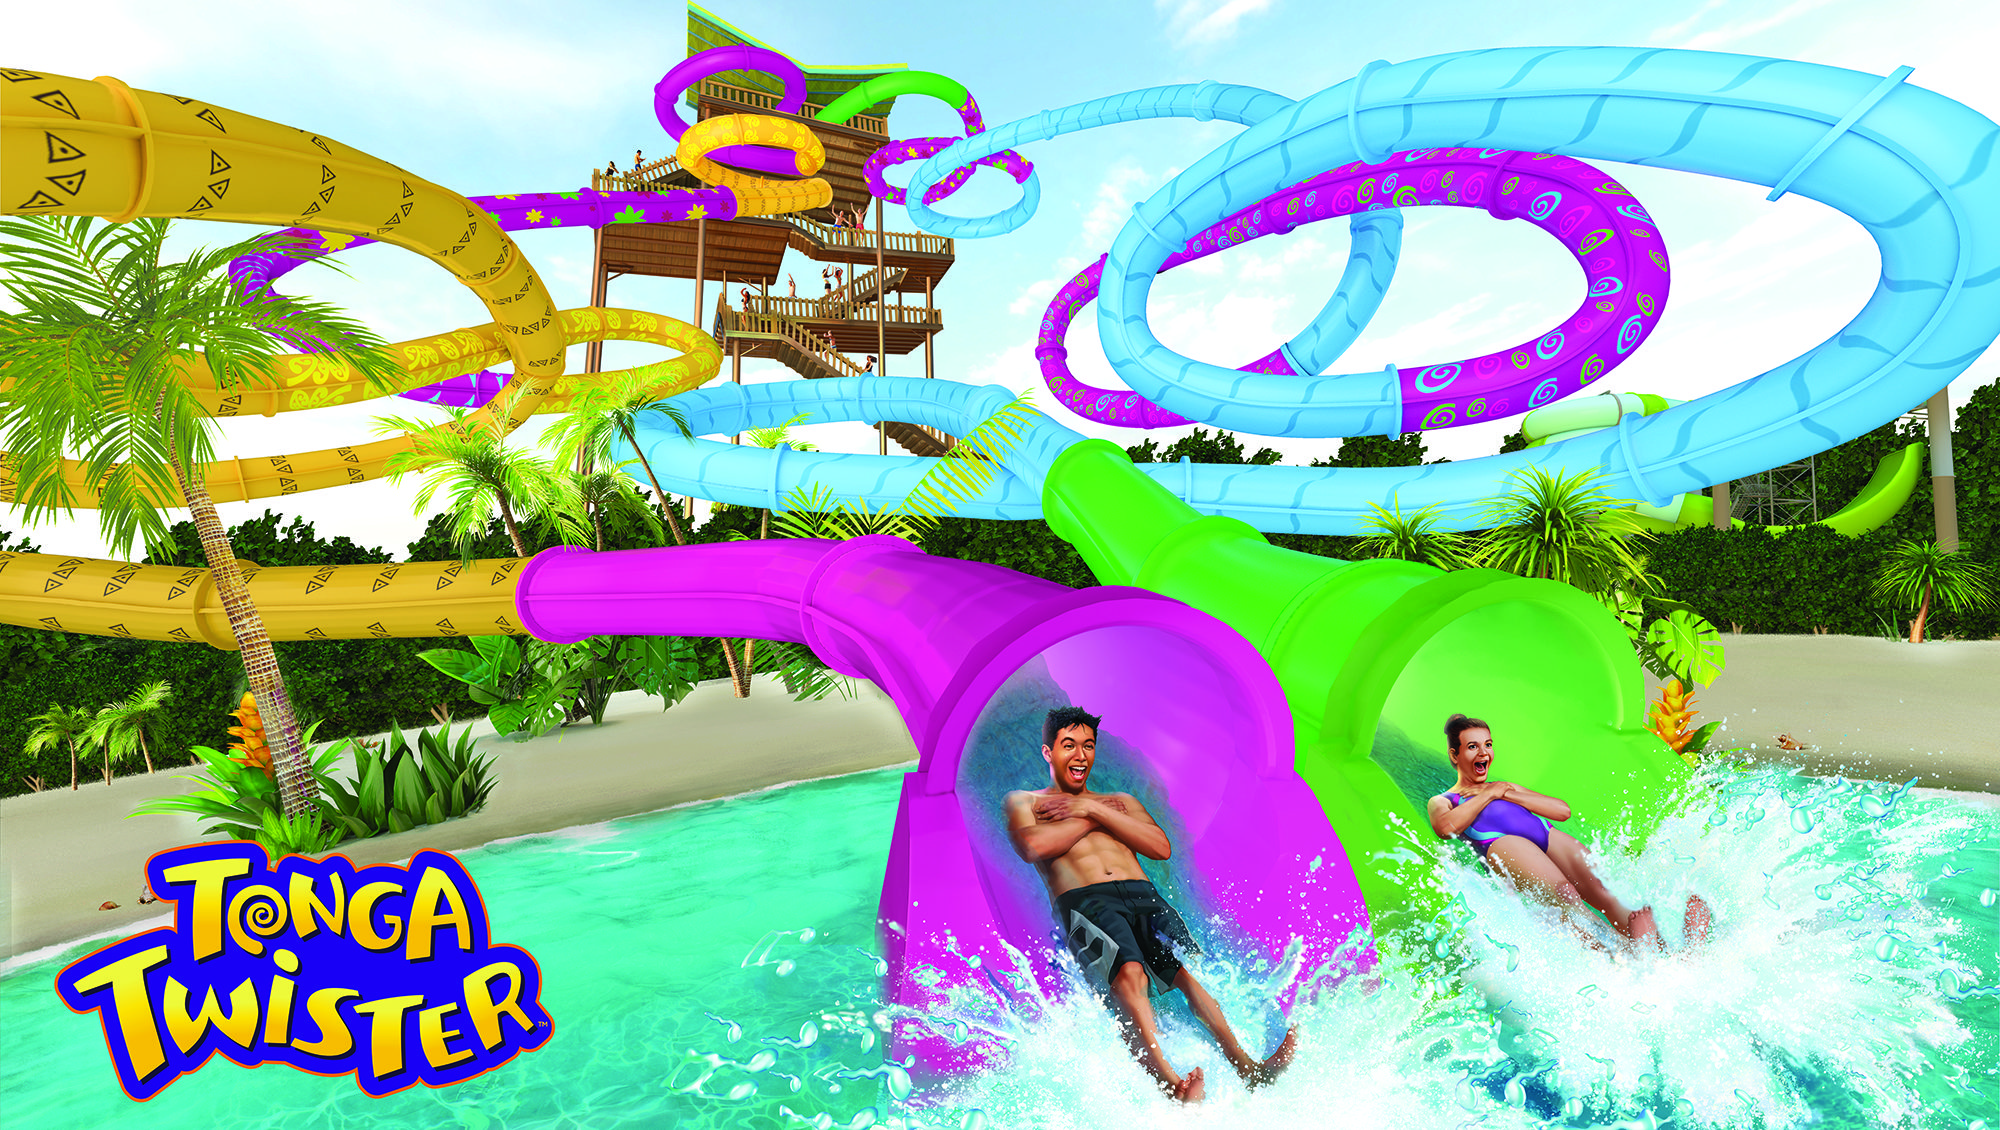 Tonga Twister Opens At Aquatica San Antonio Interpark